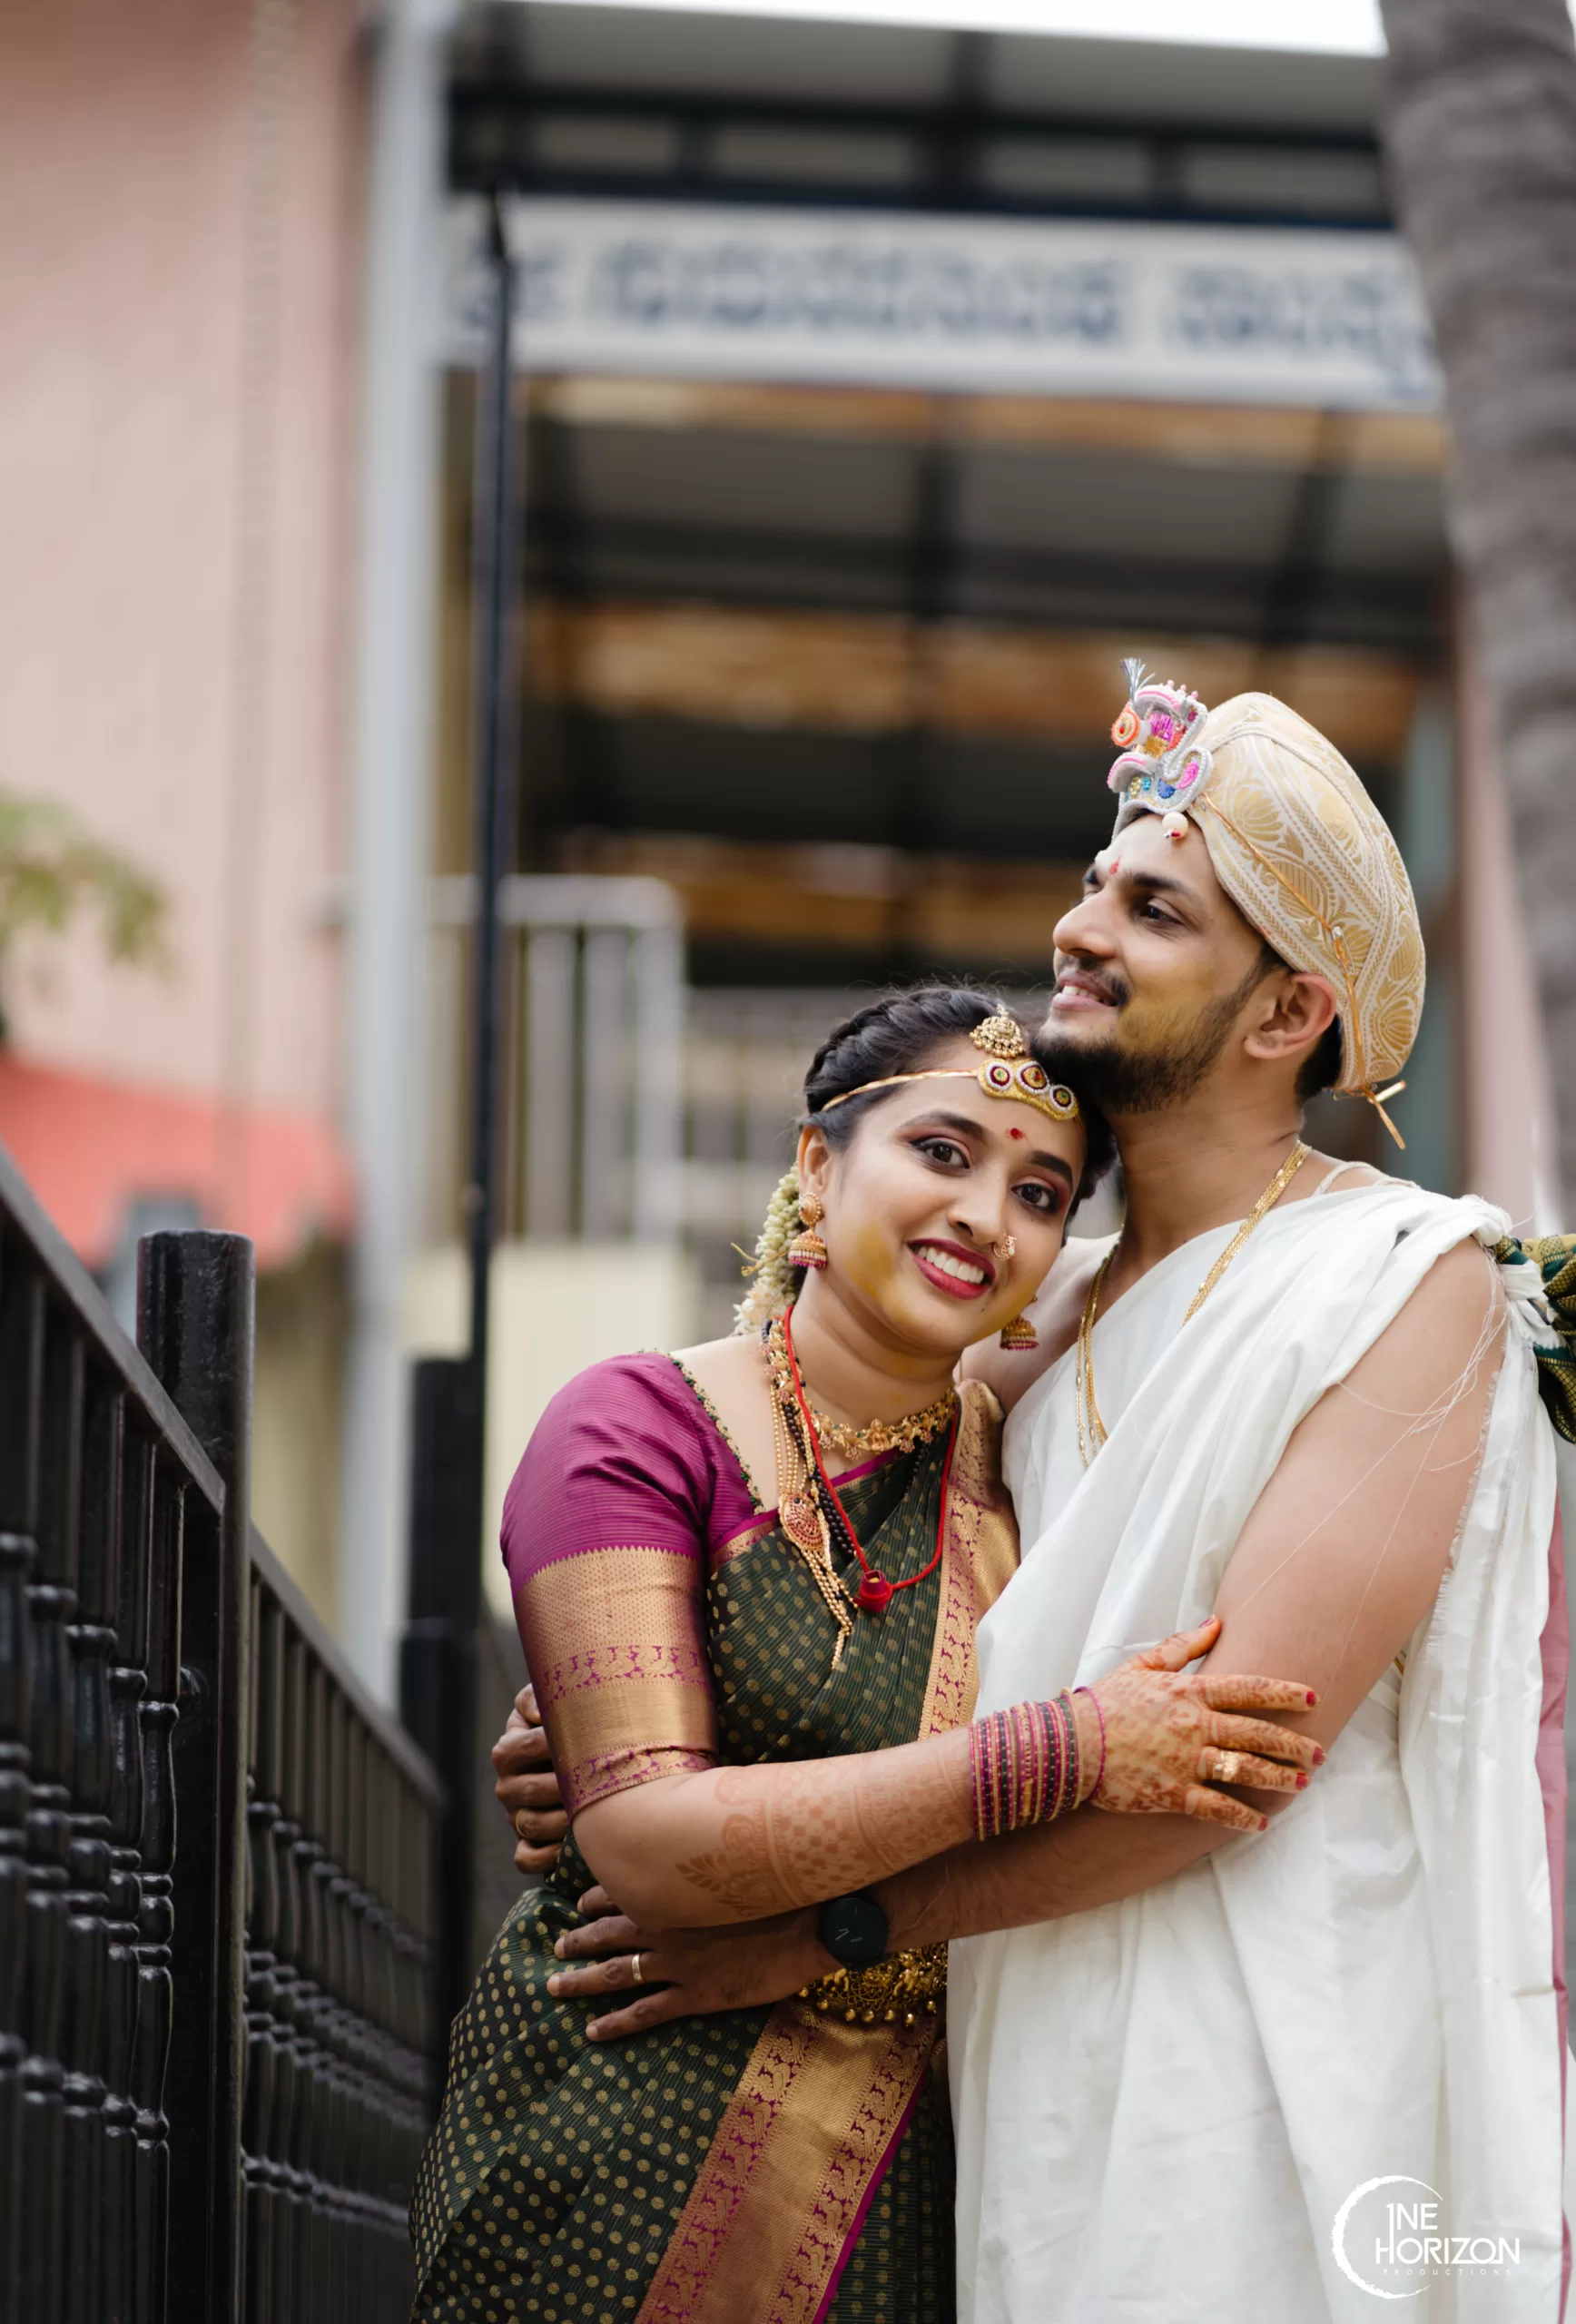 Pre-wedding Photoshoot Ideas for Indian Couple - K4 Fashion